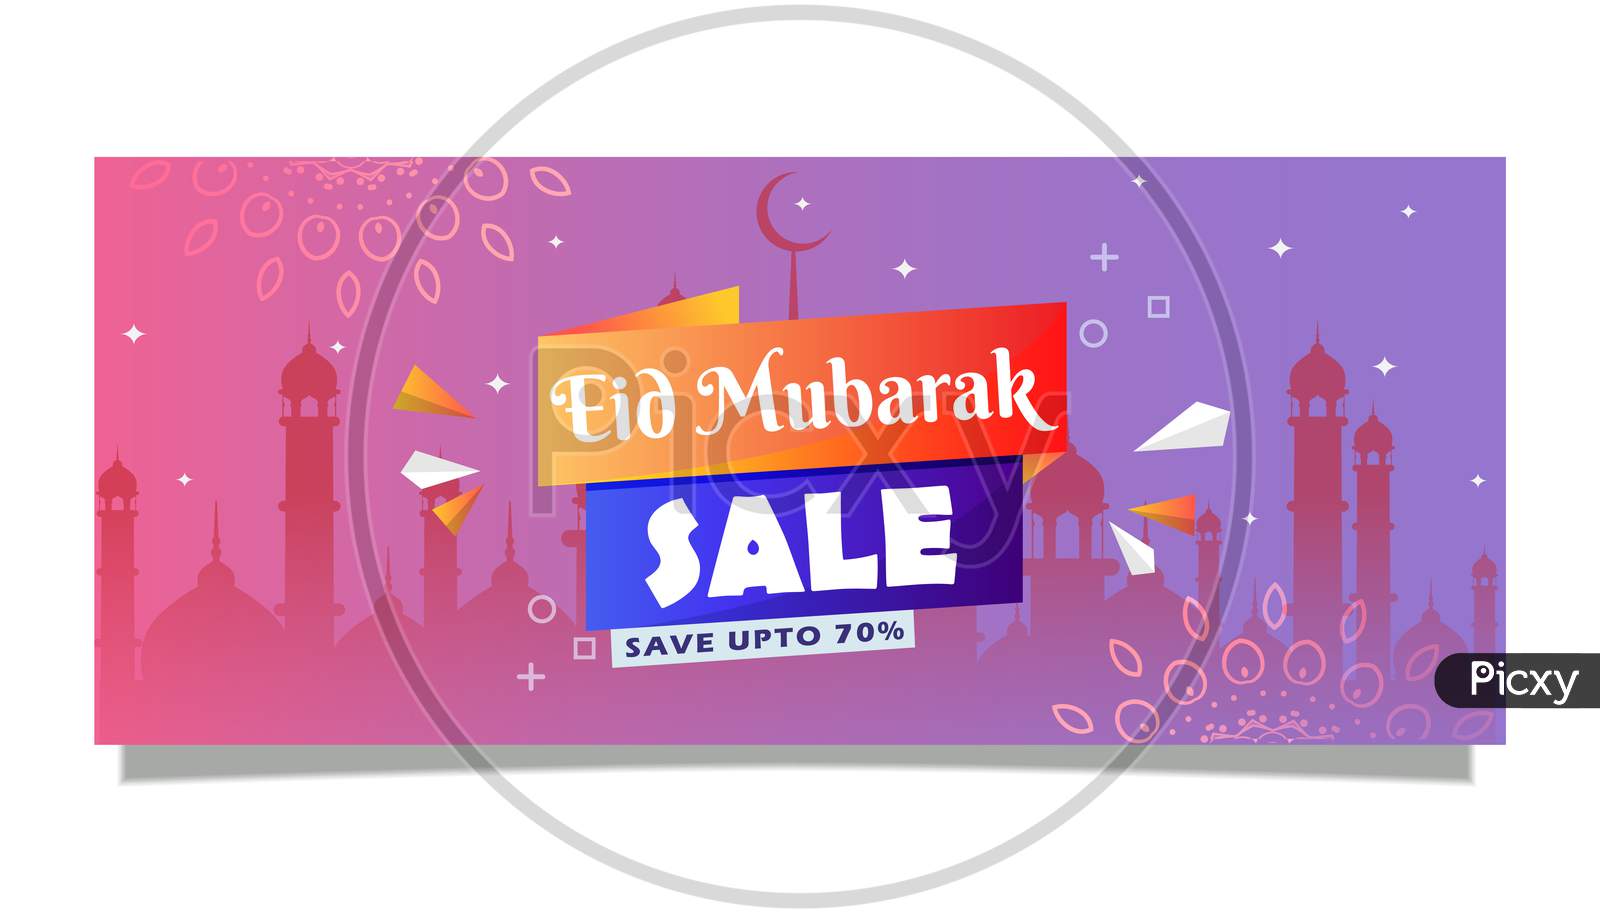 Eid Mubarak Sale, Save Upto, Discount Banner Template, Fully Editable,Vector Illustration